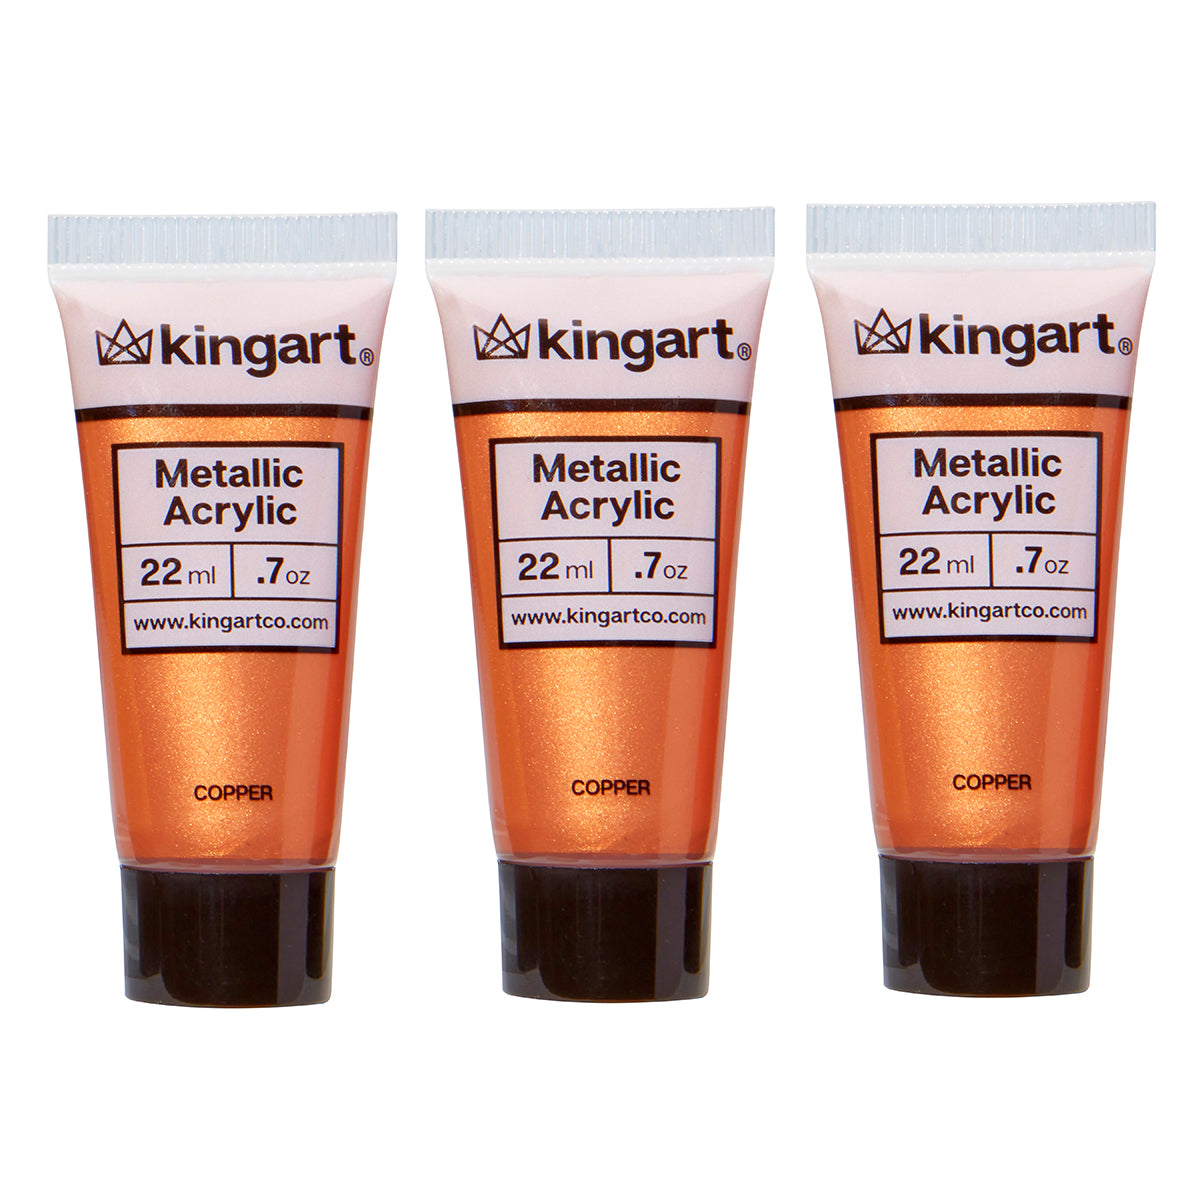 KINGART® Pouring Acrylic Paint, 60ml (2oz) Bottle, Pre-Mixed Ready